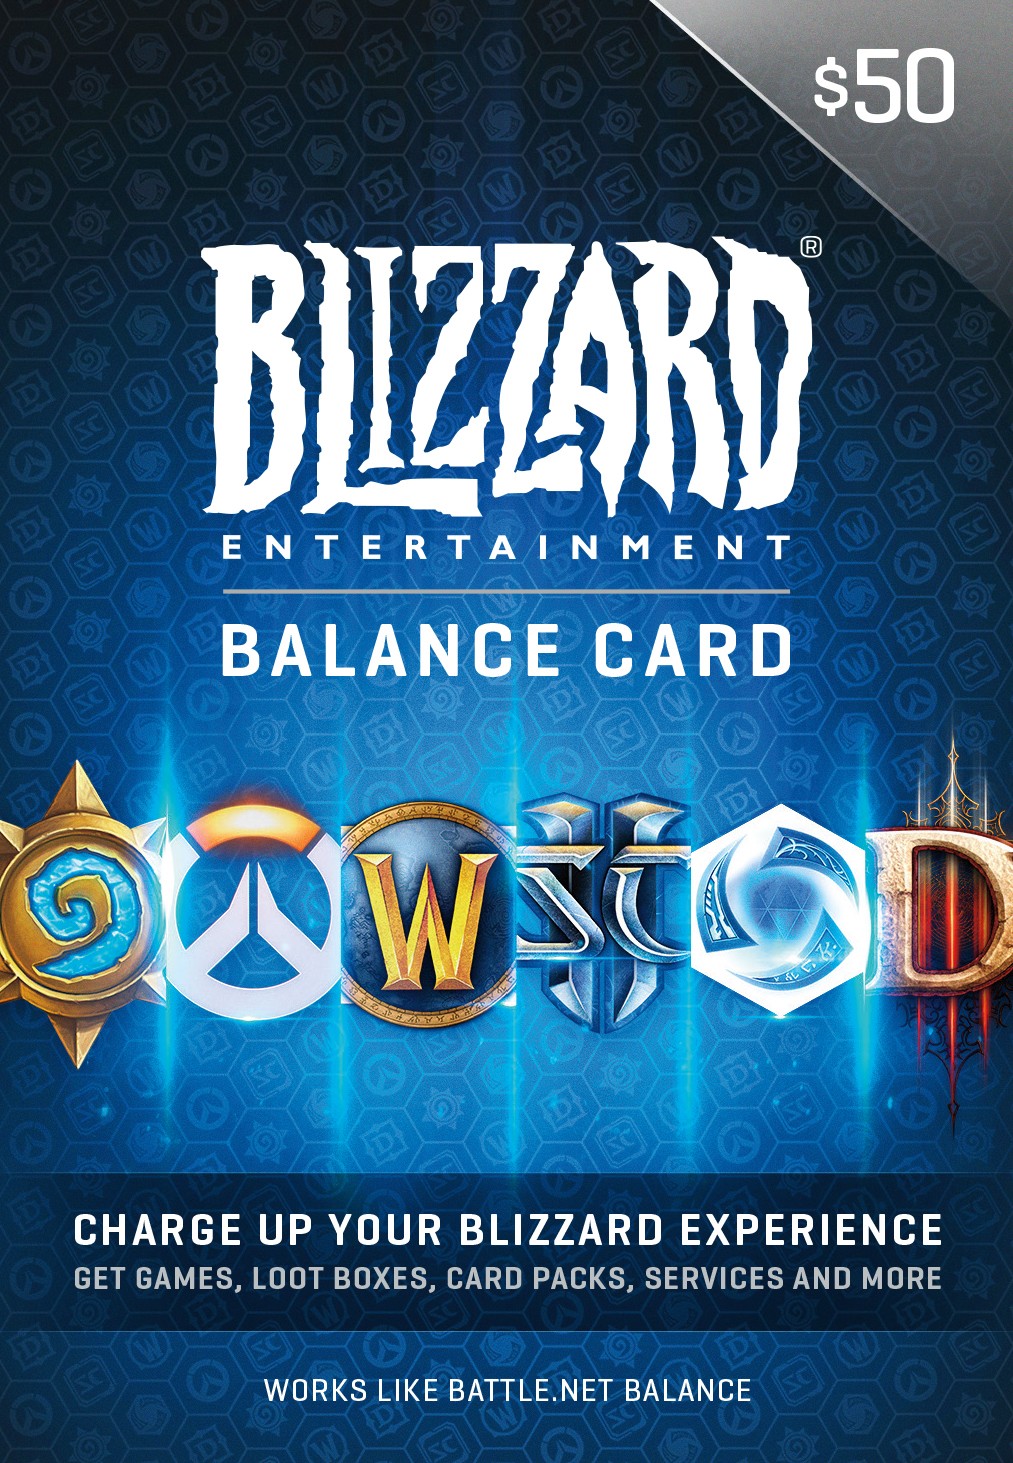 Battle.net balance card